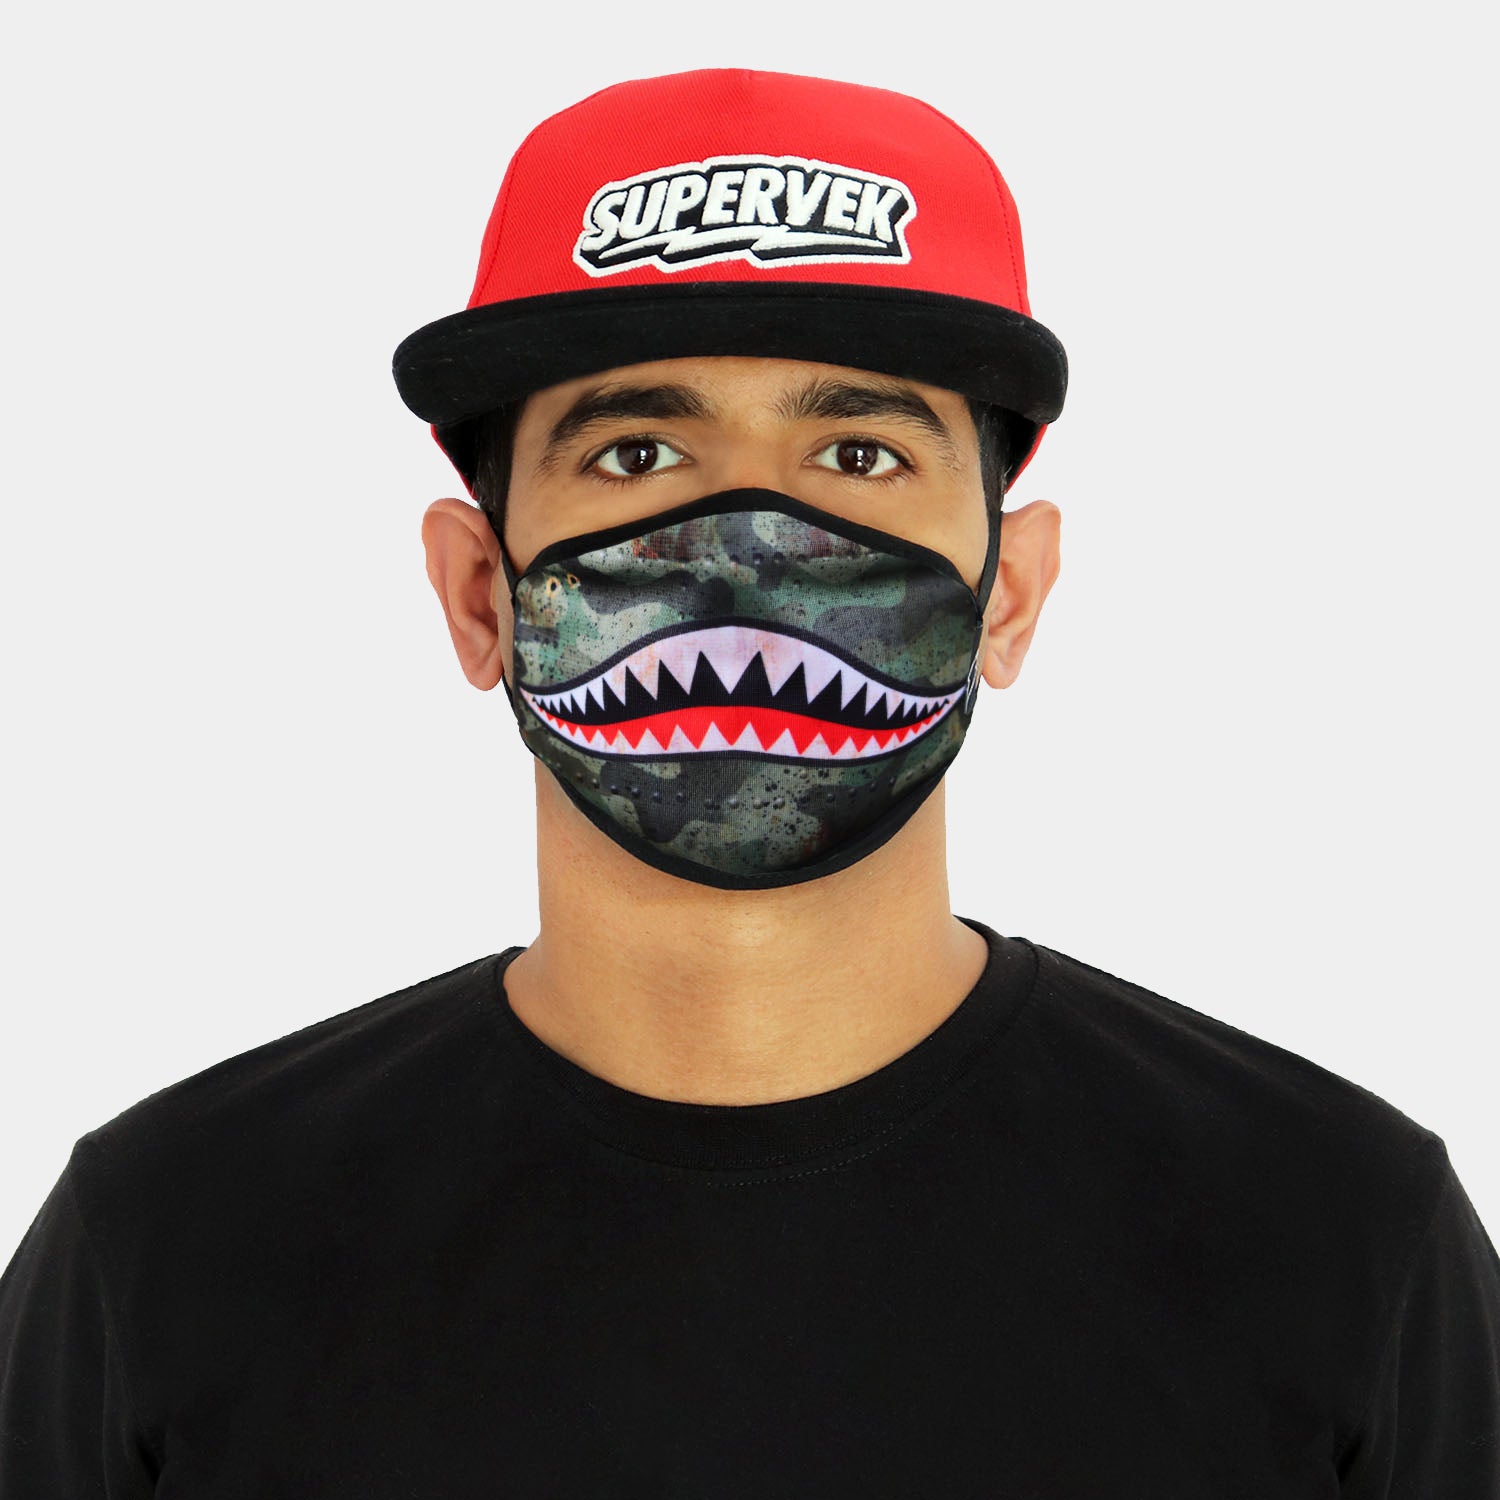 Super Shark Face Mask - Supervek India, smsk-sush-1, smsk-sush-2